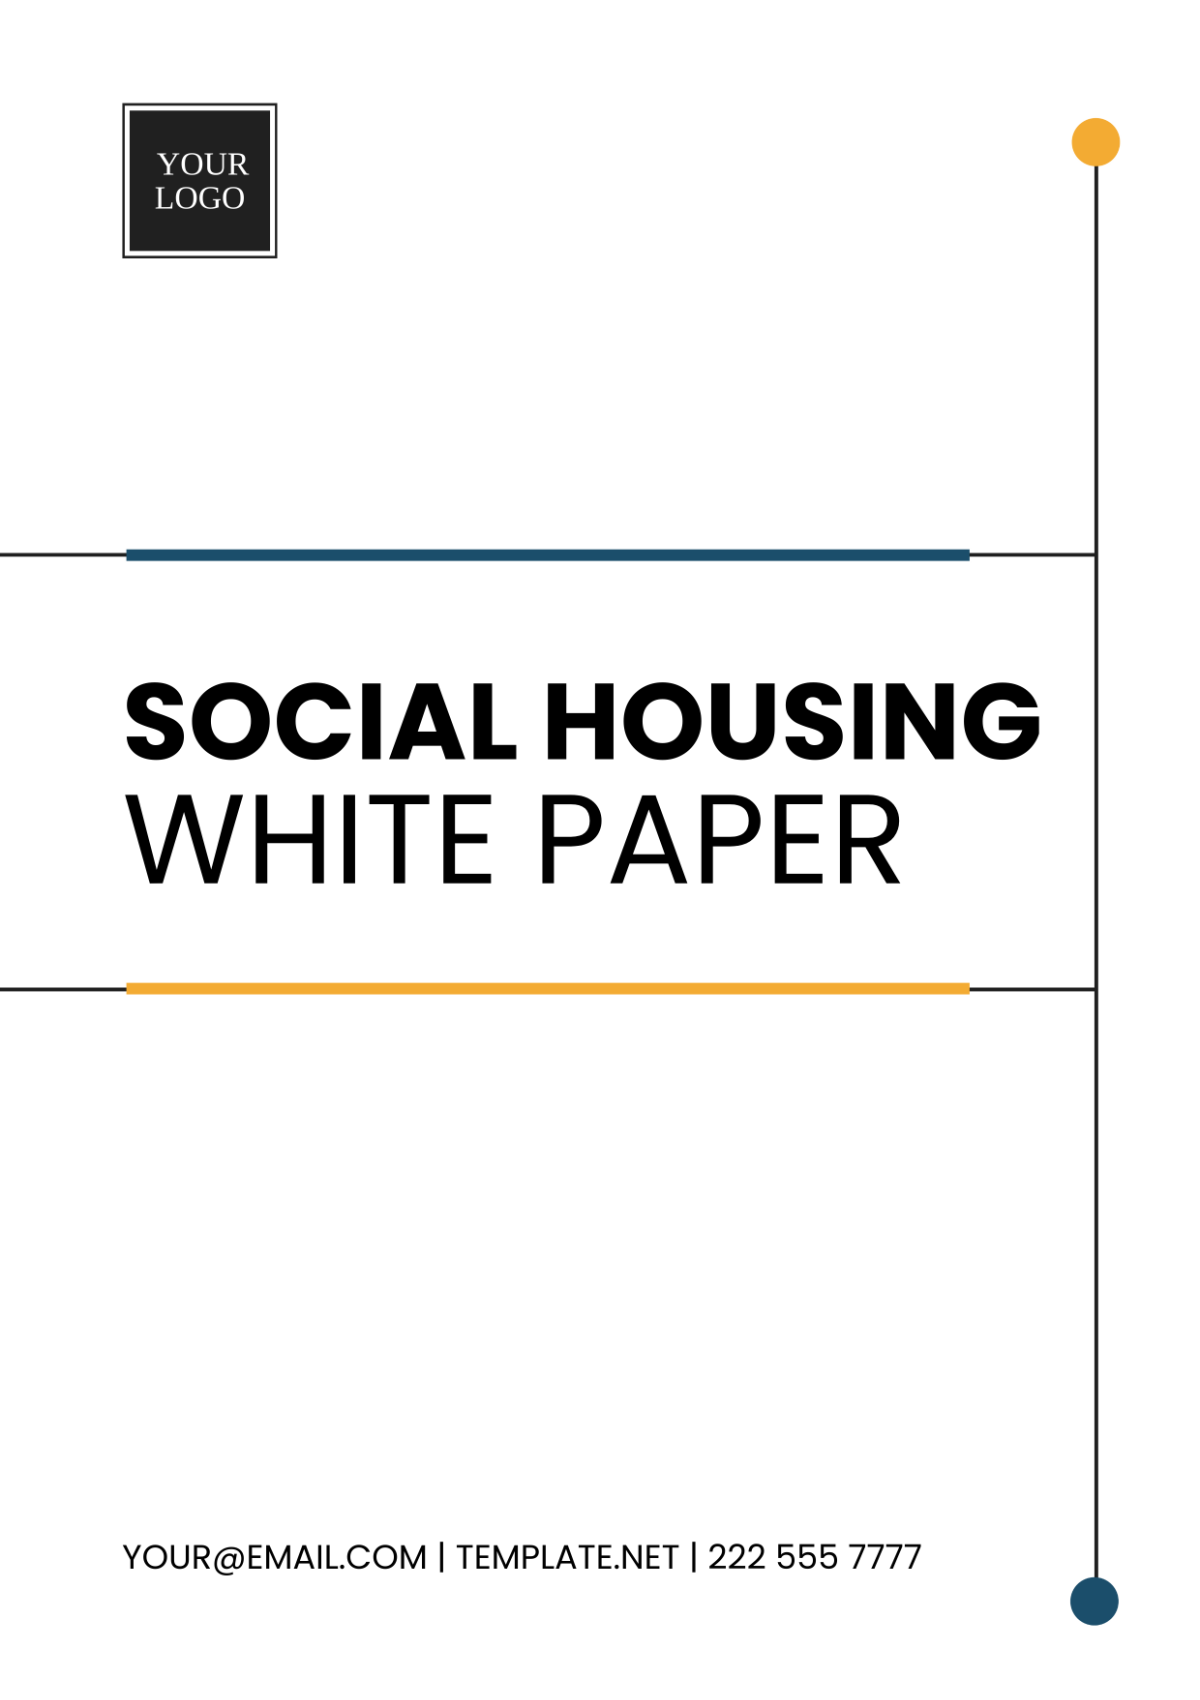 Social Housing White Paper Template